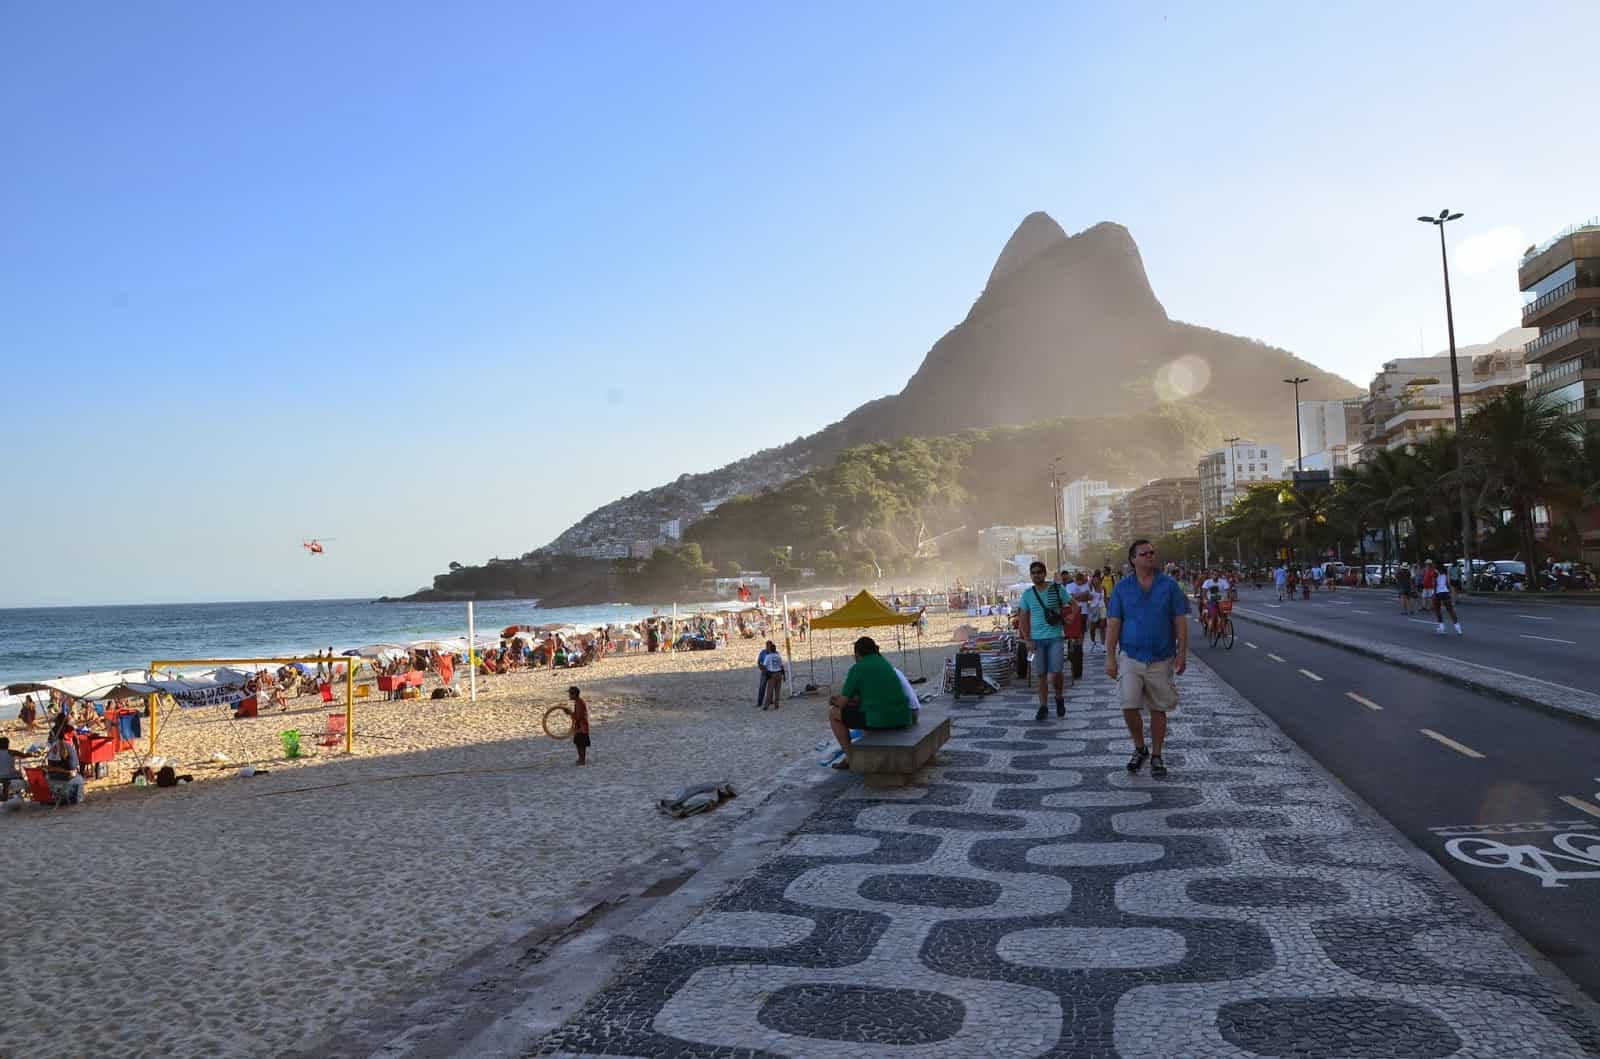 Leblon in Rio de Janeiro, Brazil